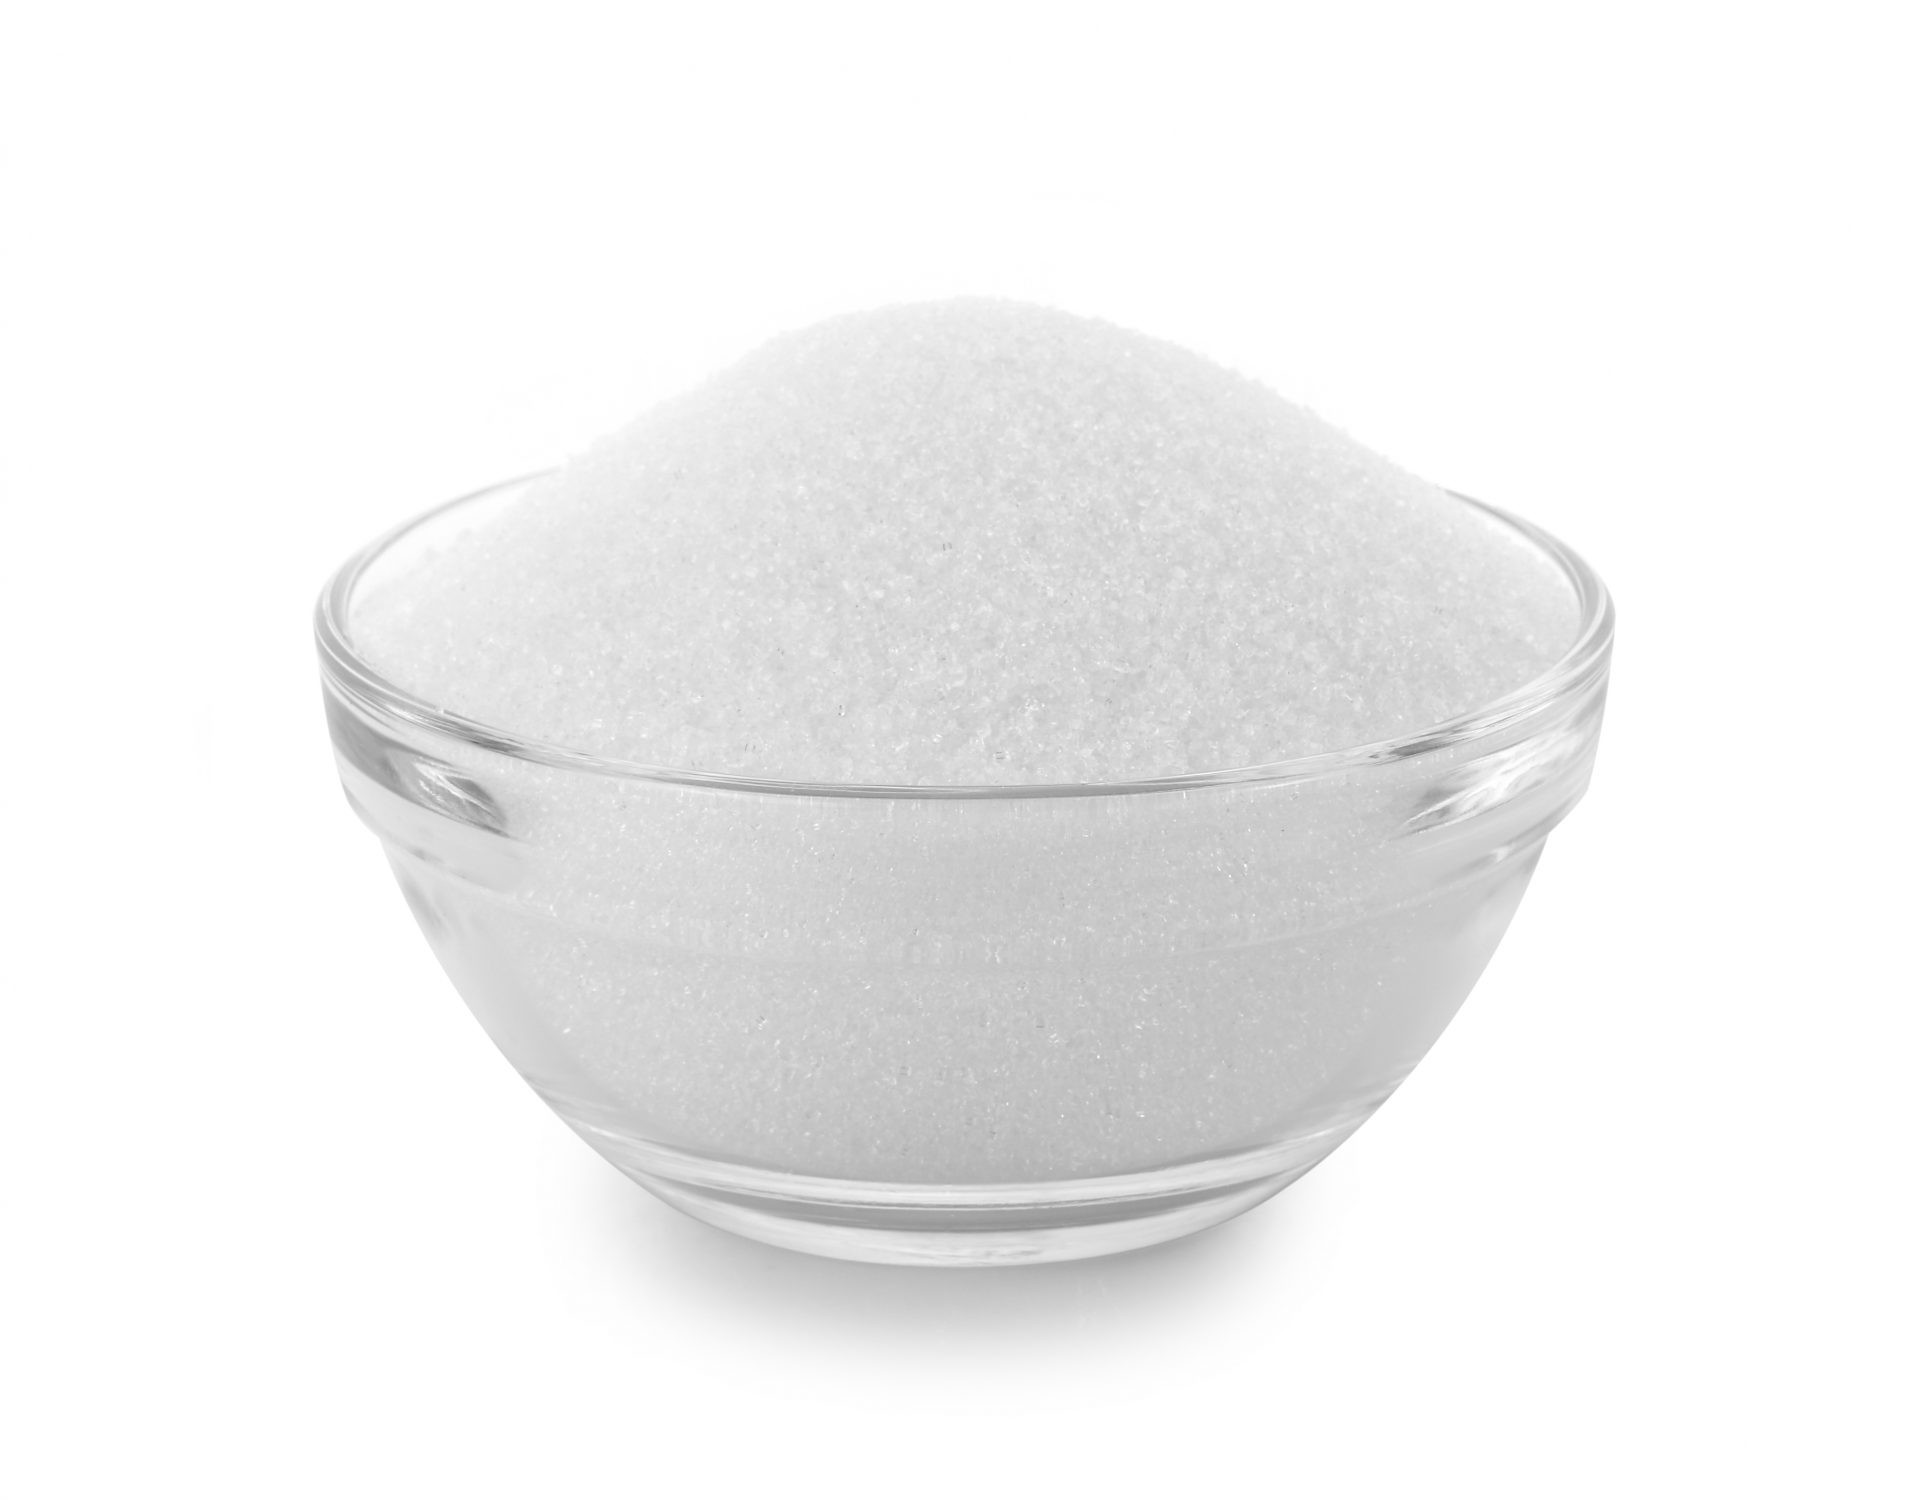 a bowl of white sugar